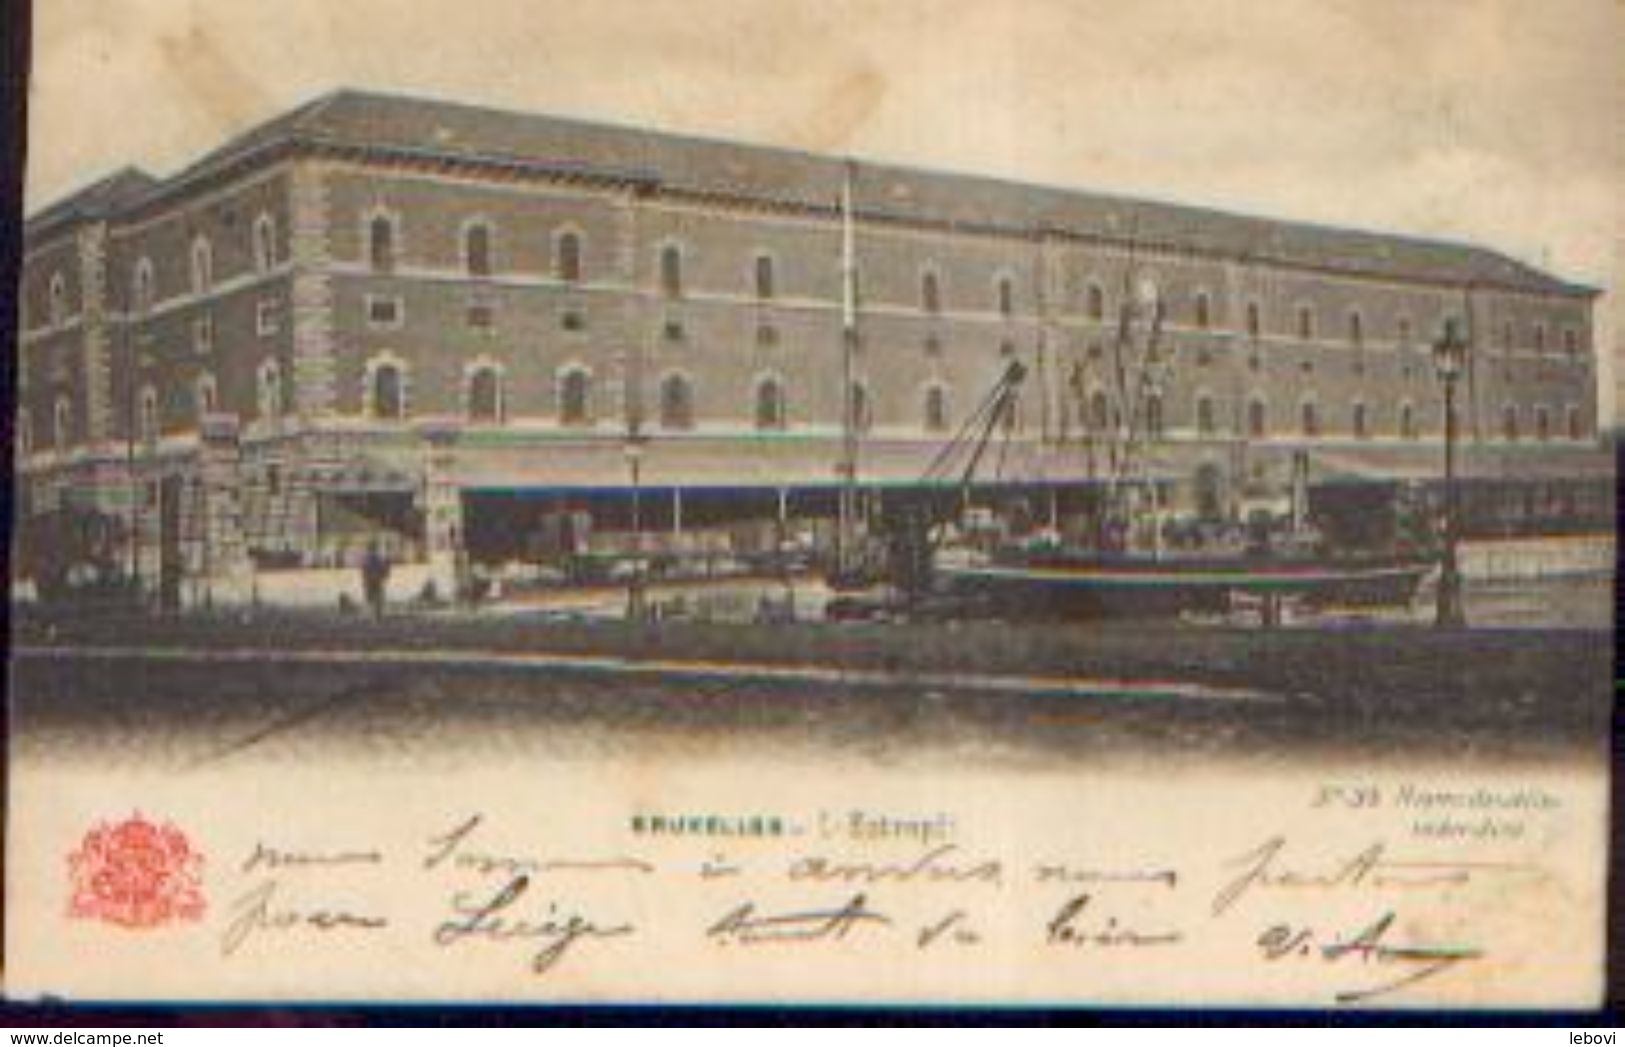 BRUXELLES « L’entrepôt»- Ed. Grand Bazar Anspach, Bxl (1904). - Hafenwesen